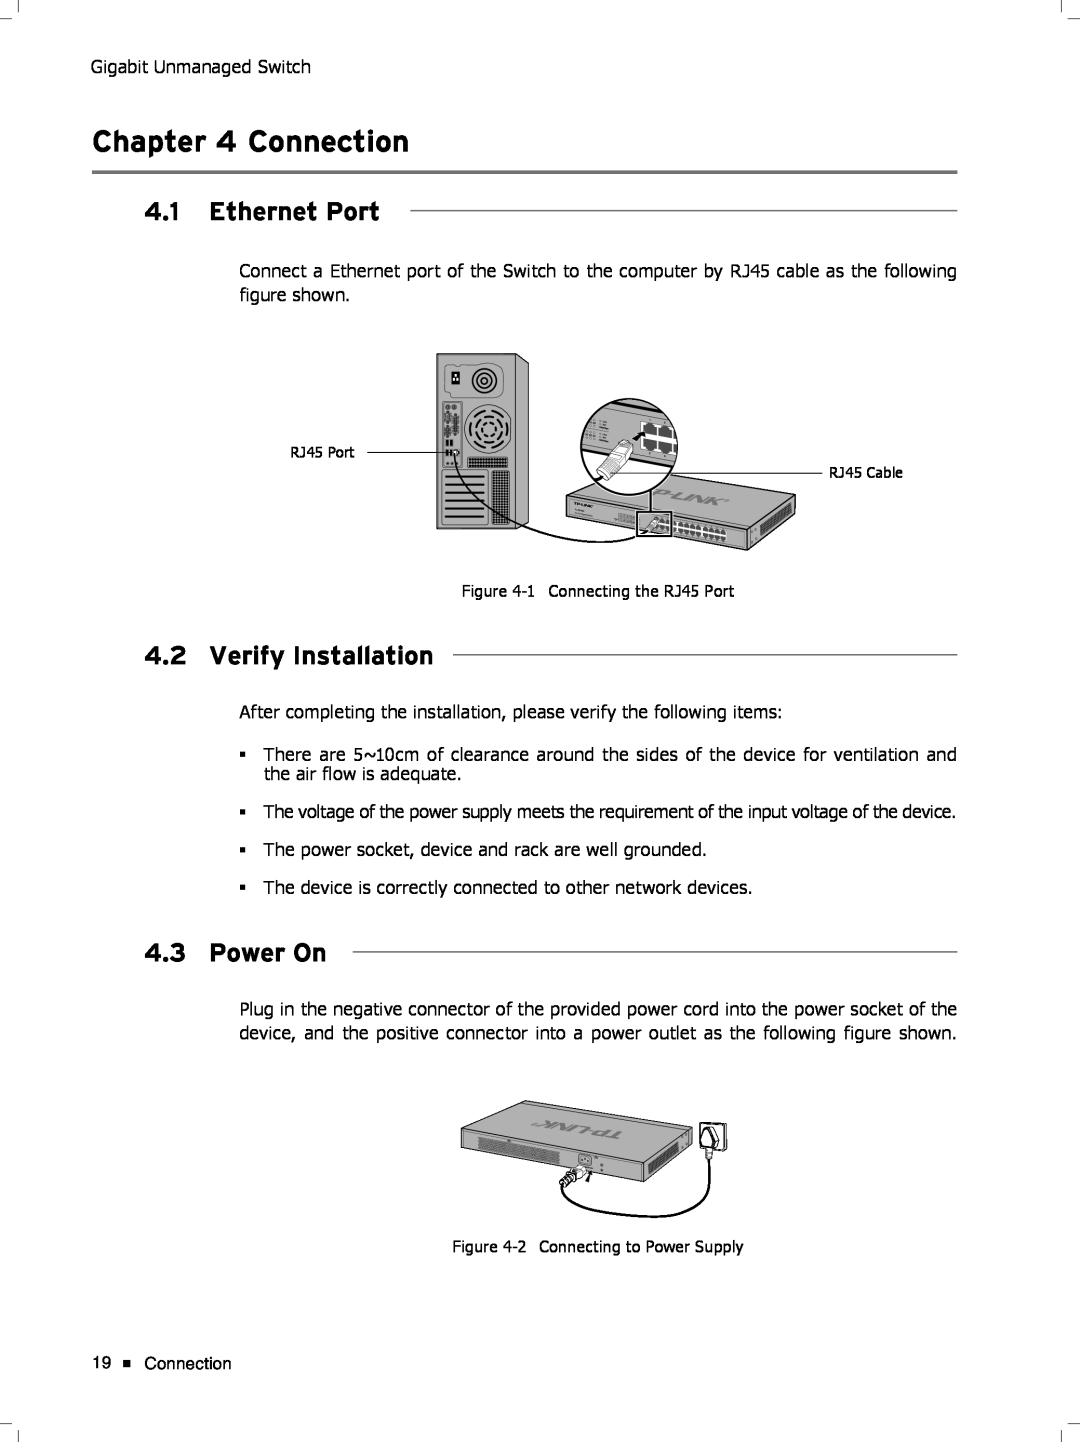 TP-Link tl-sg1048 manual CCCCCCCCCCConnection, Ethernet Port, Verify Installation, Power On 